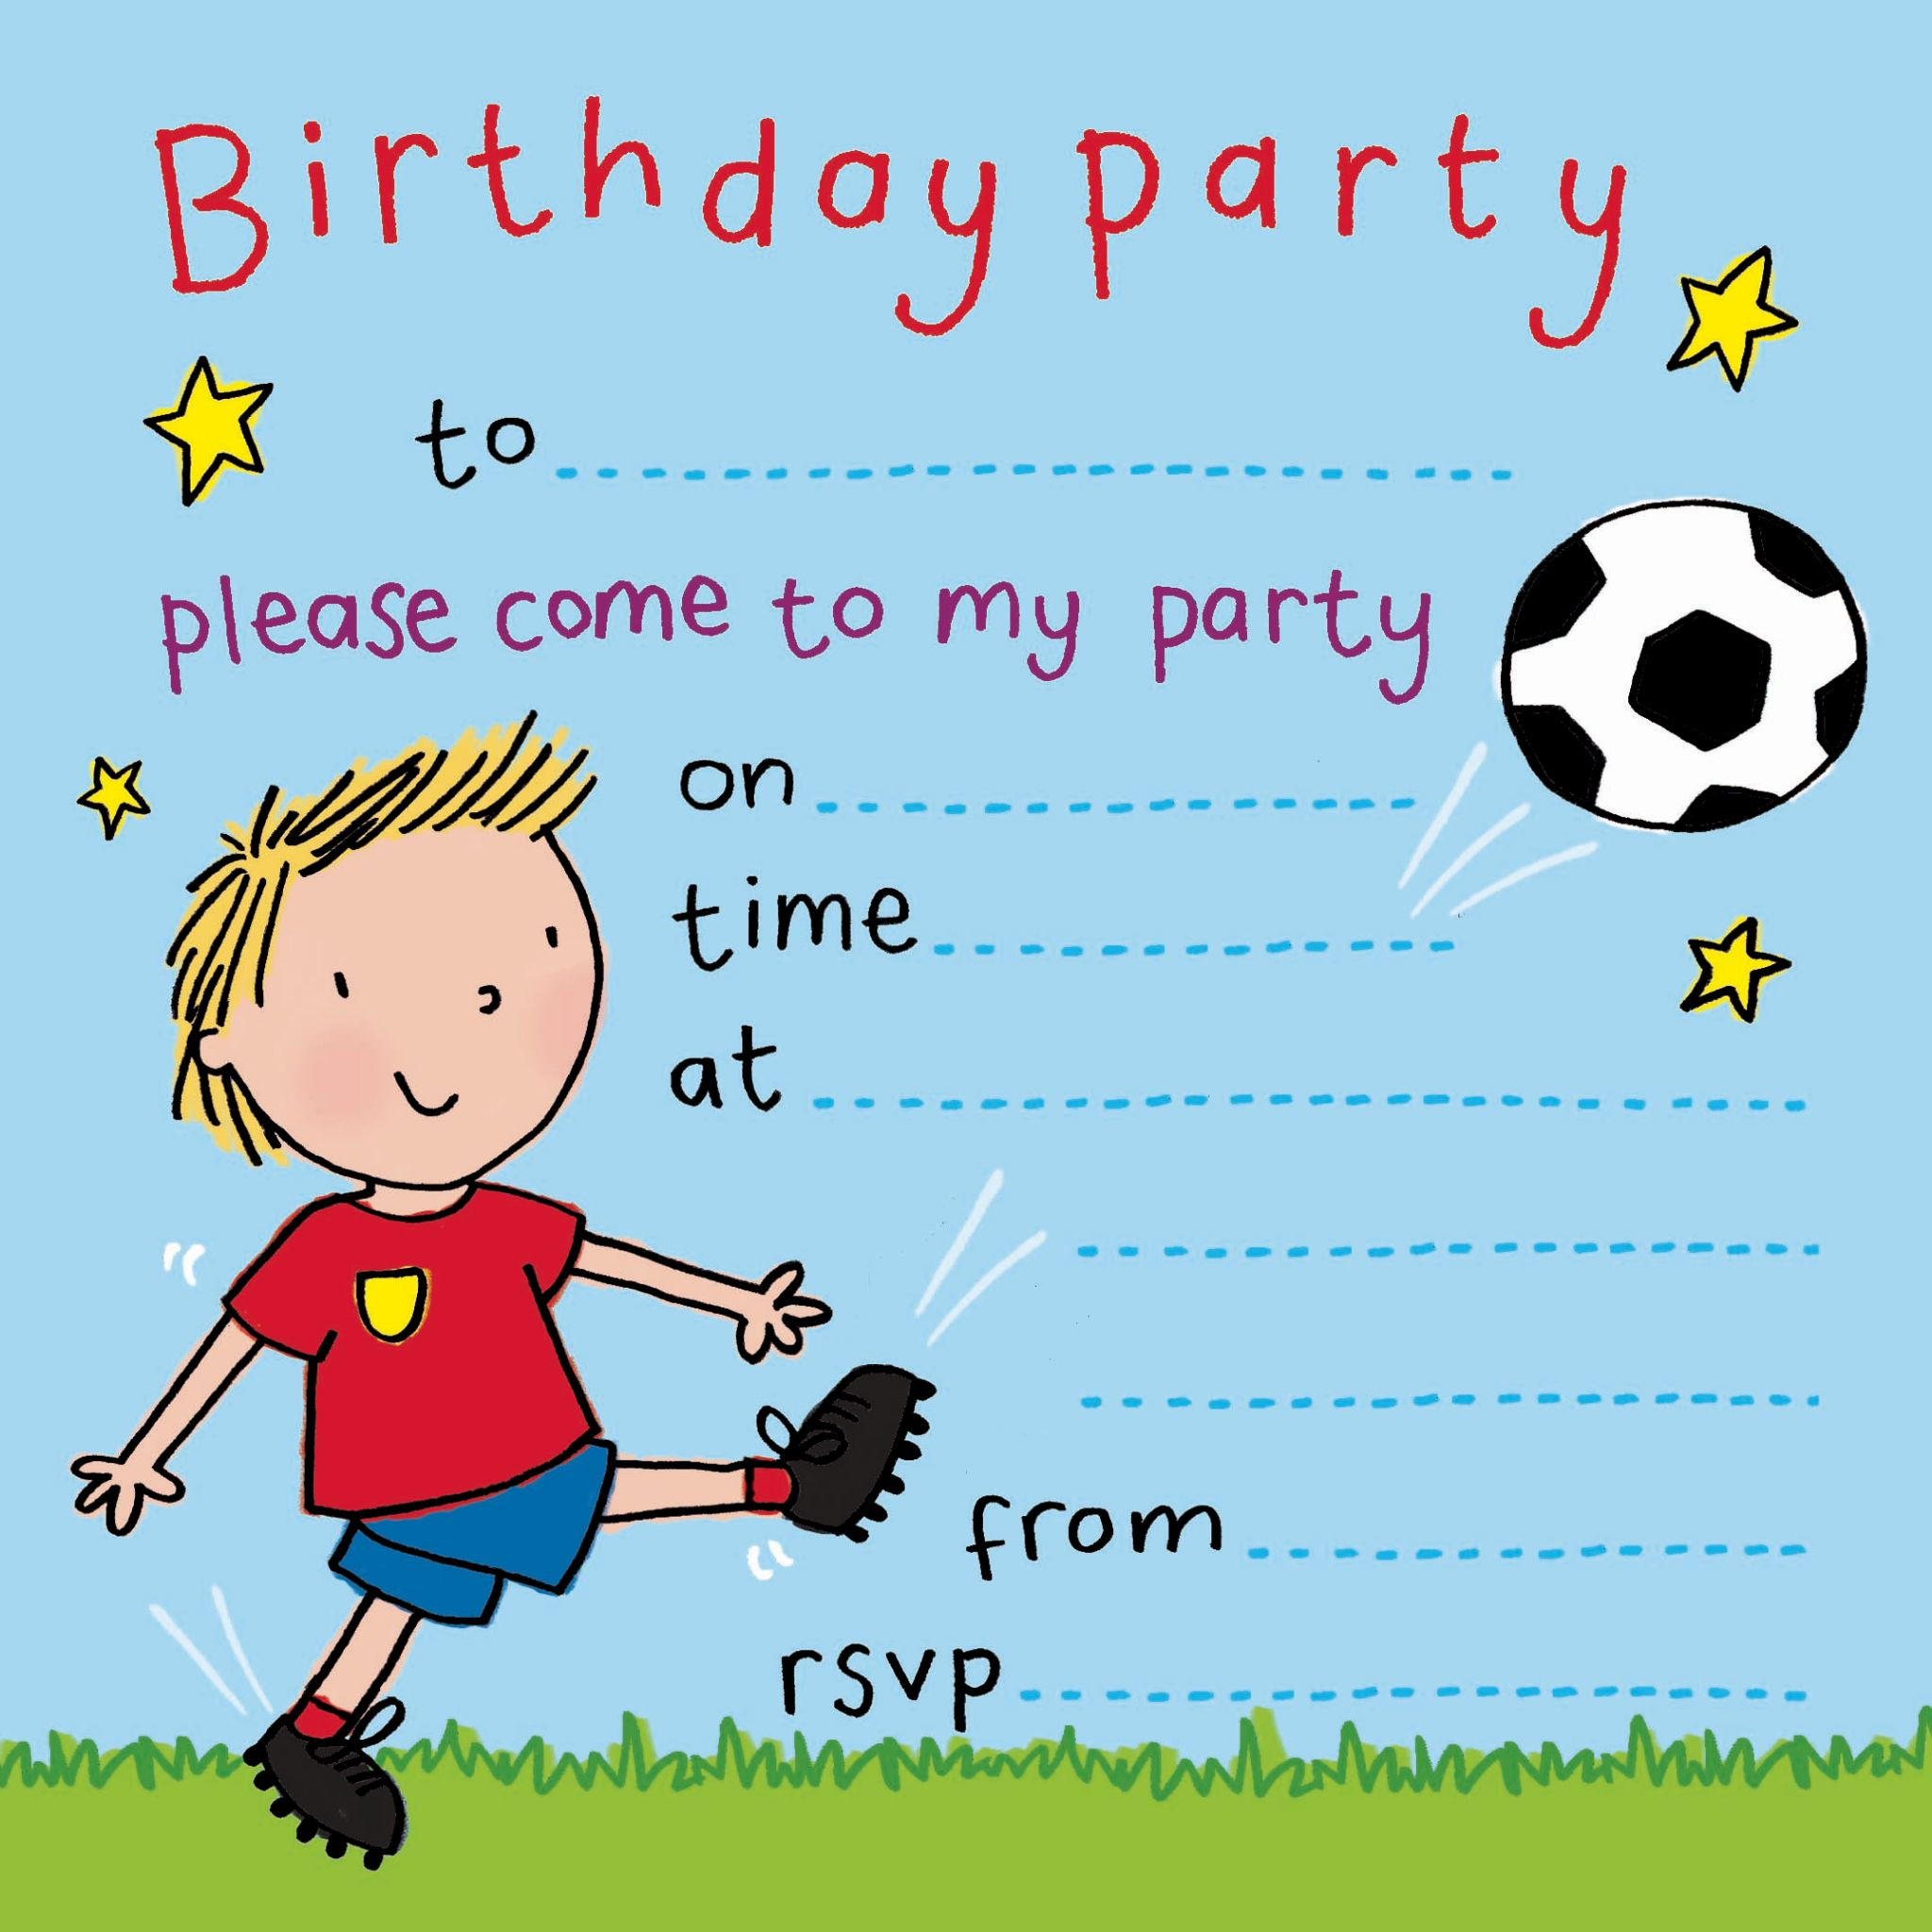 Best ideas about Children Birthday Invitations
. Save or Pin party invitations birthday party invitations kids party Now.